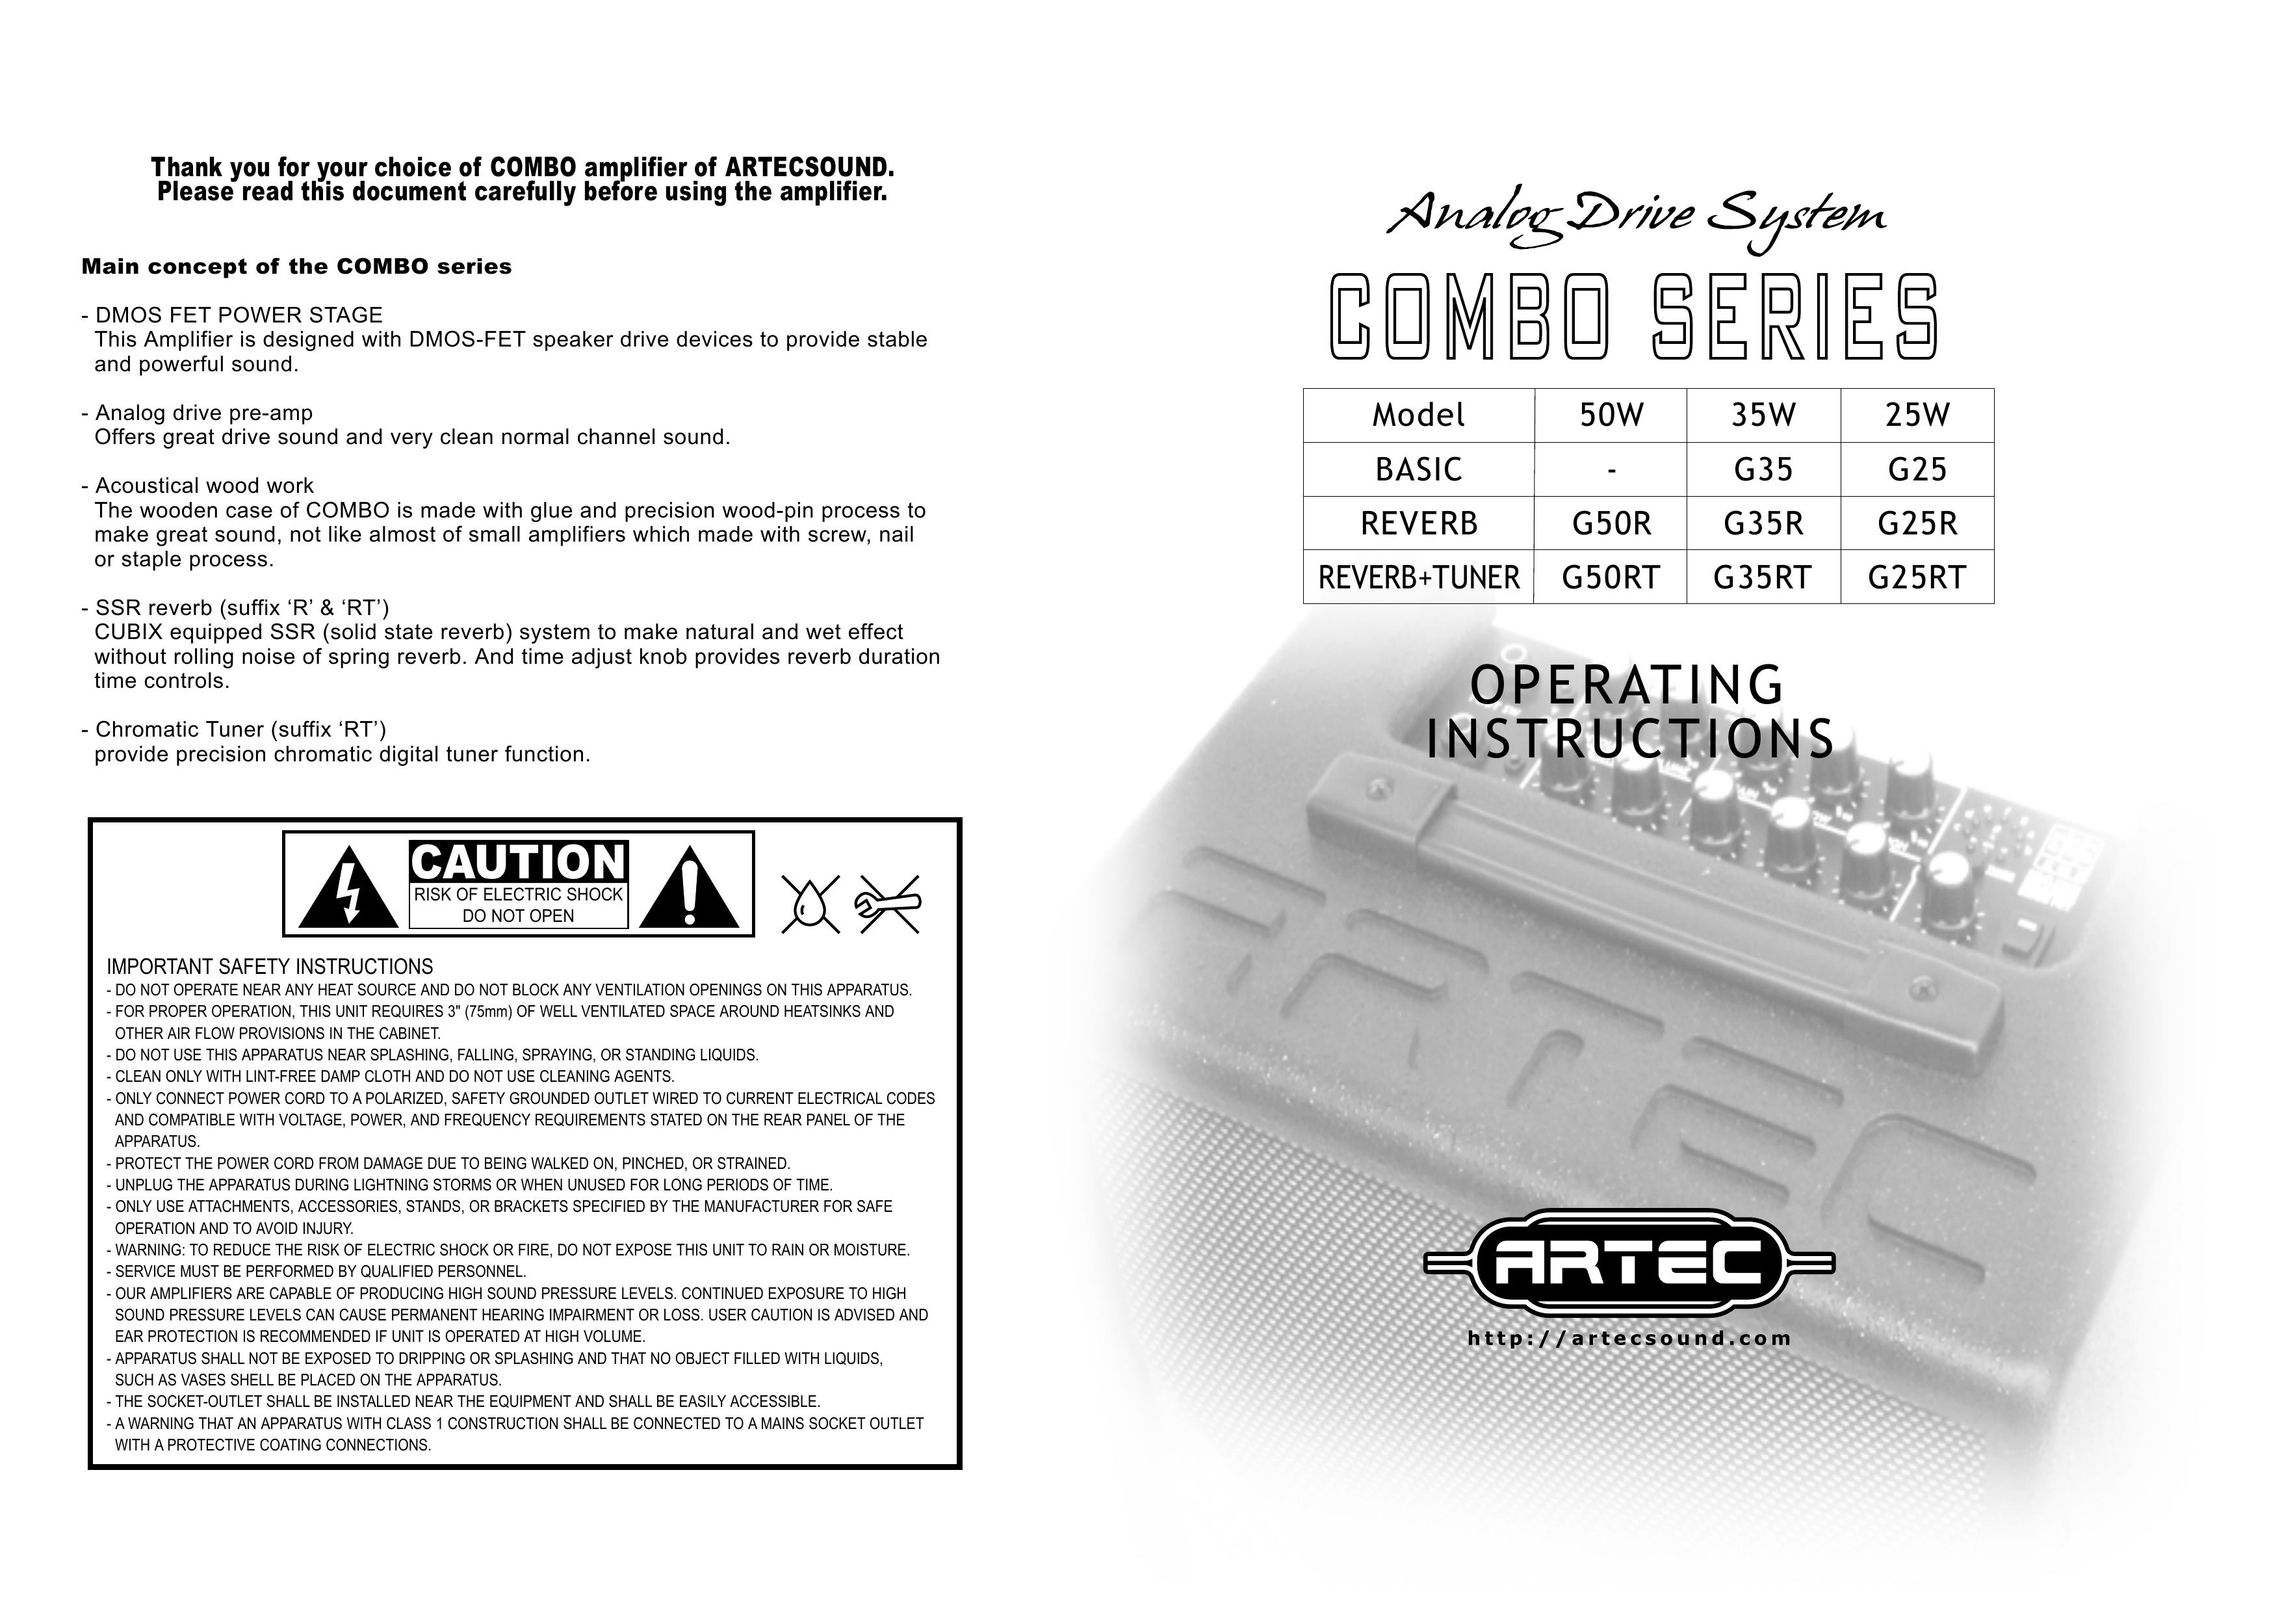 Artech USA 35W Range User Manual